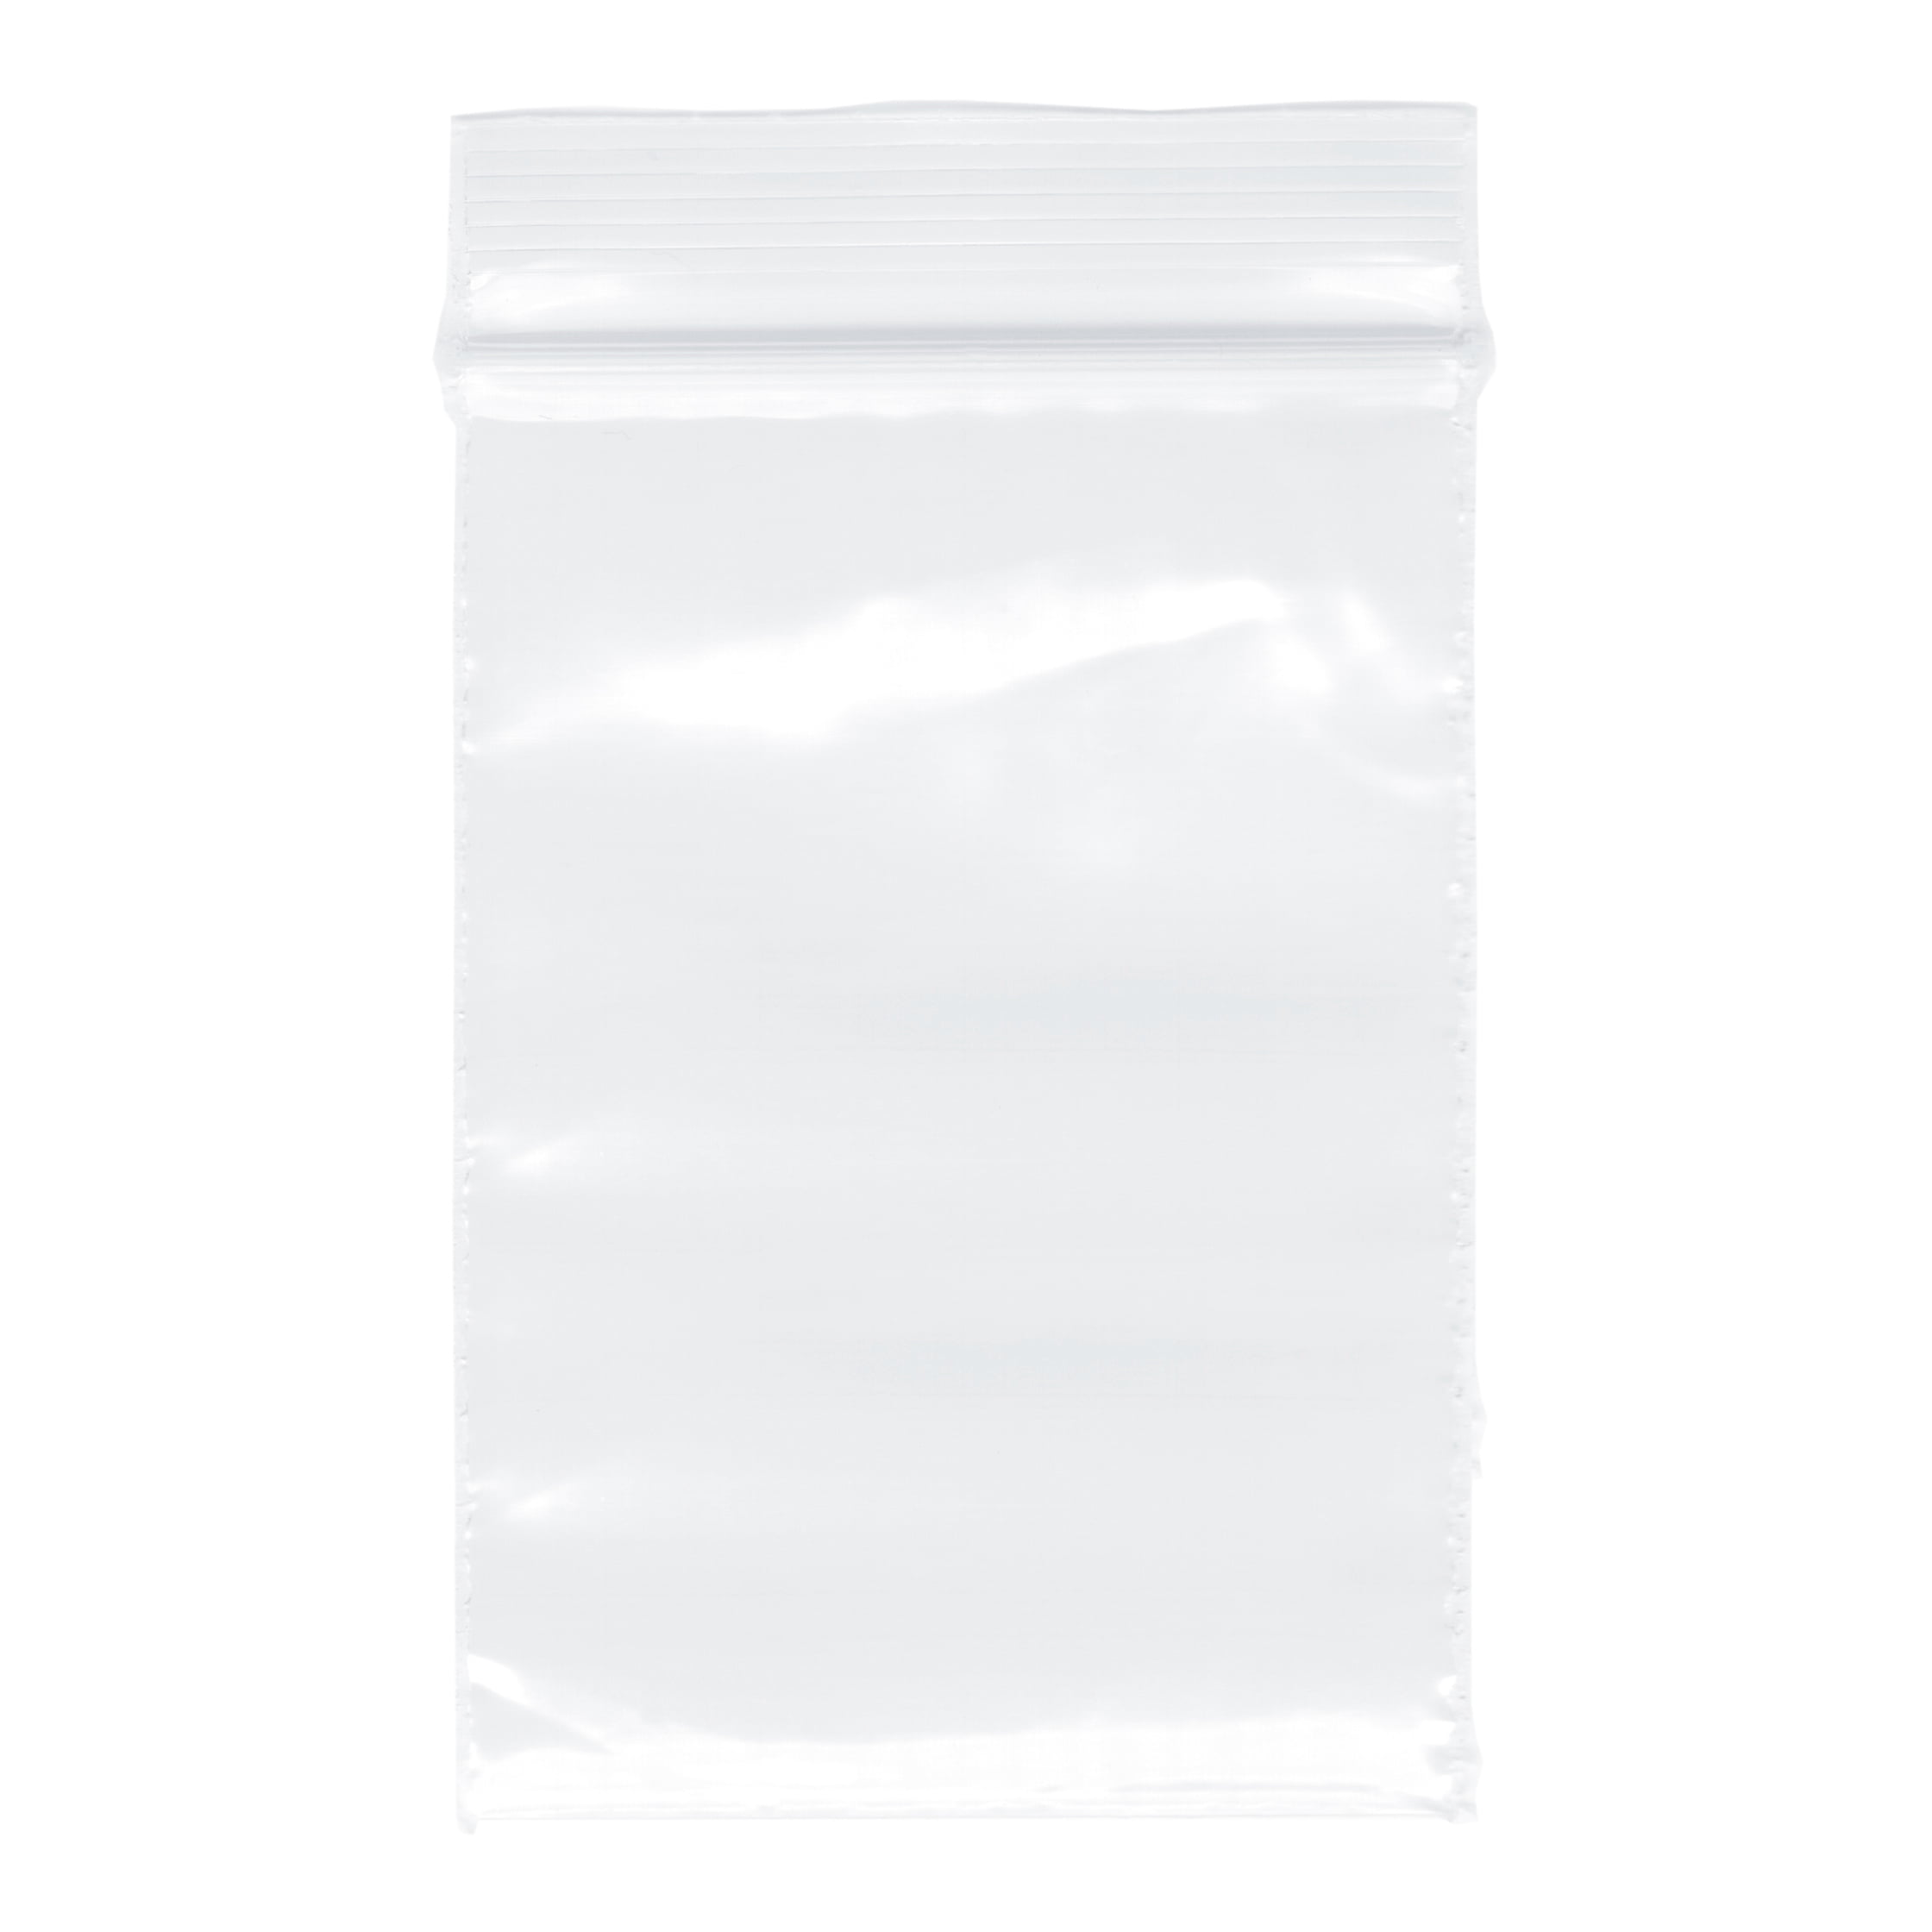 2 Mil Clear Reclosable Plastic Poly Bags 3" x 5" Top Seal Baggies 2000 Packs 